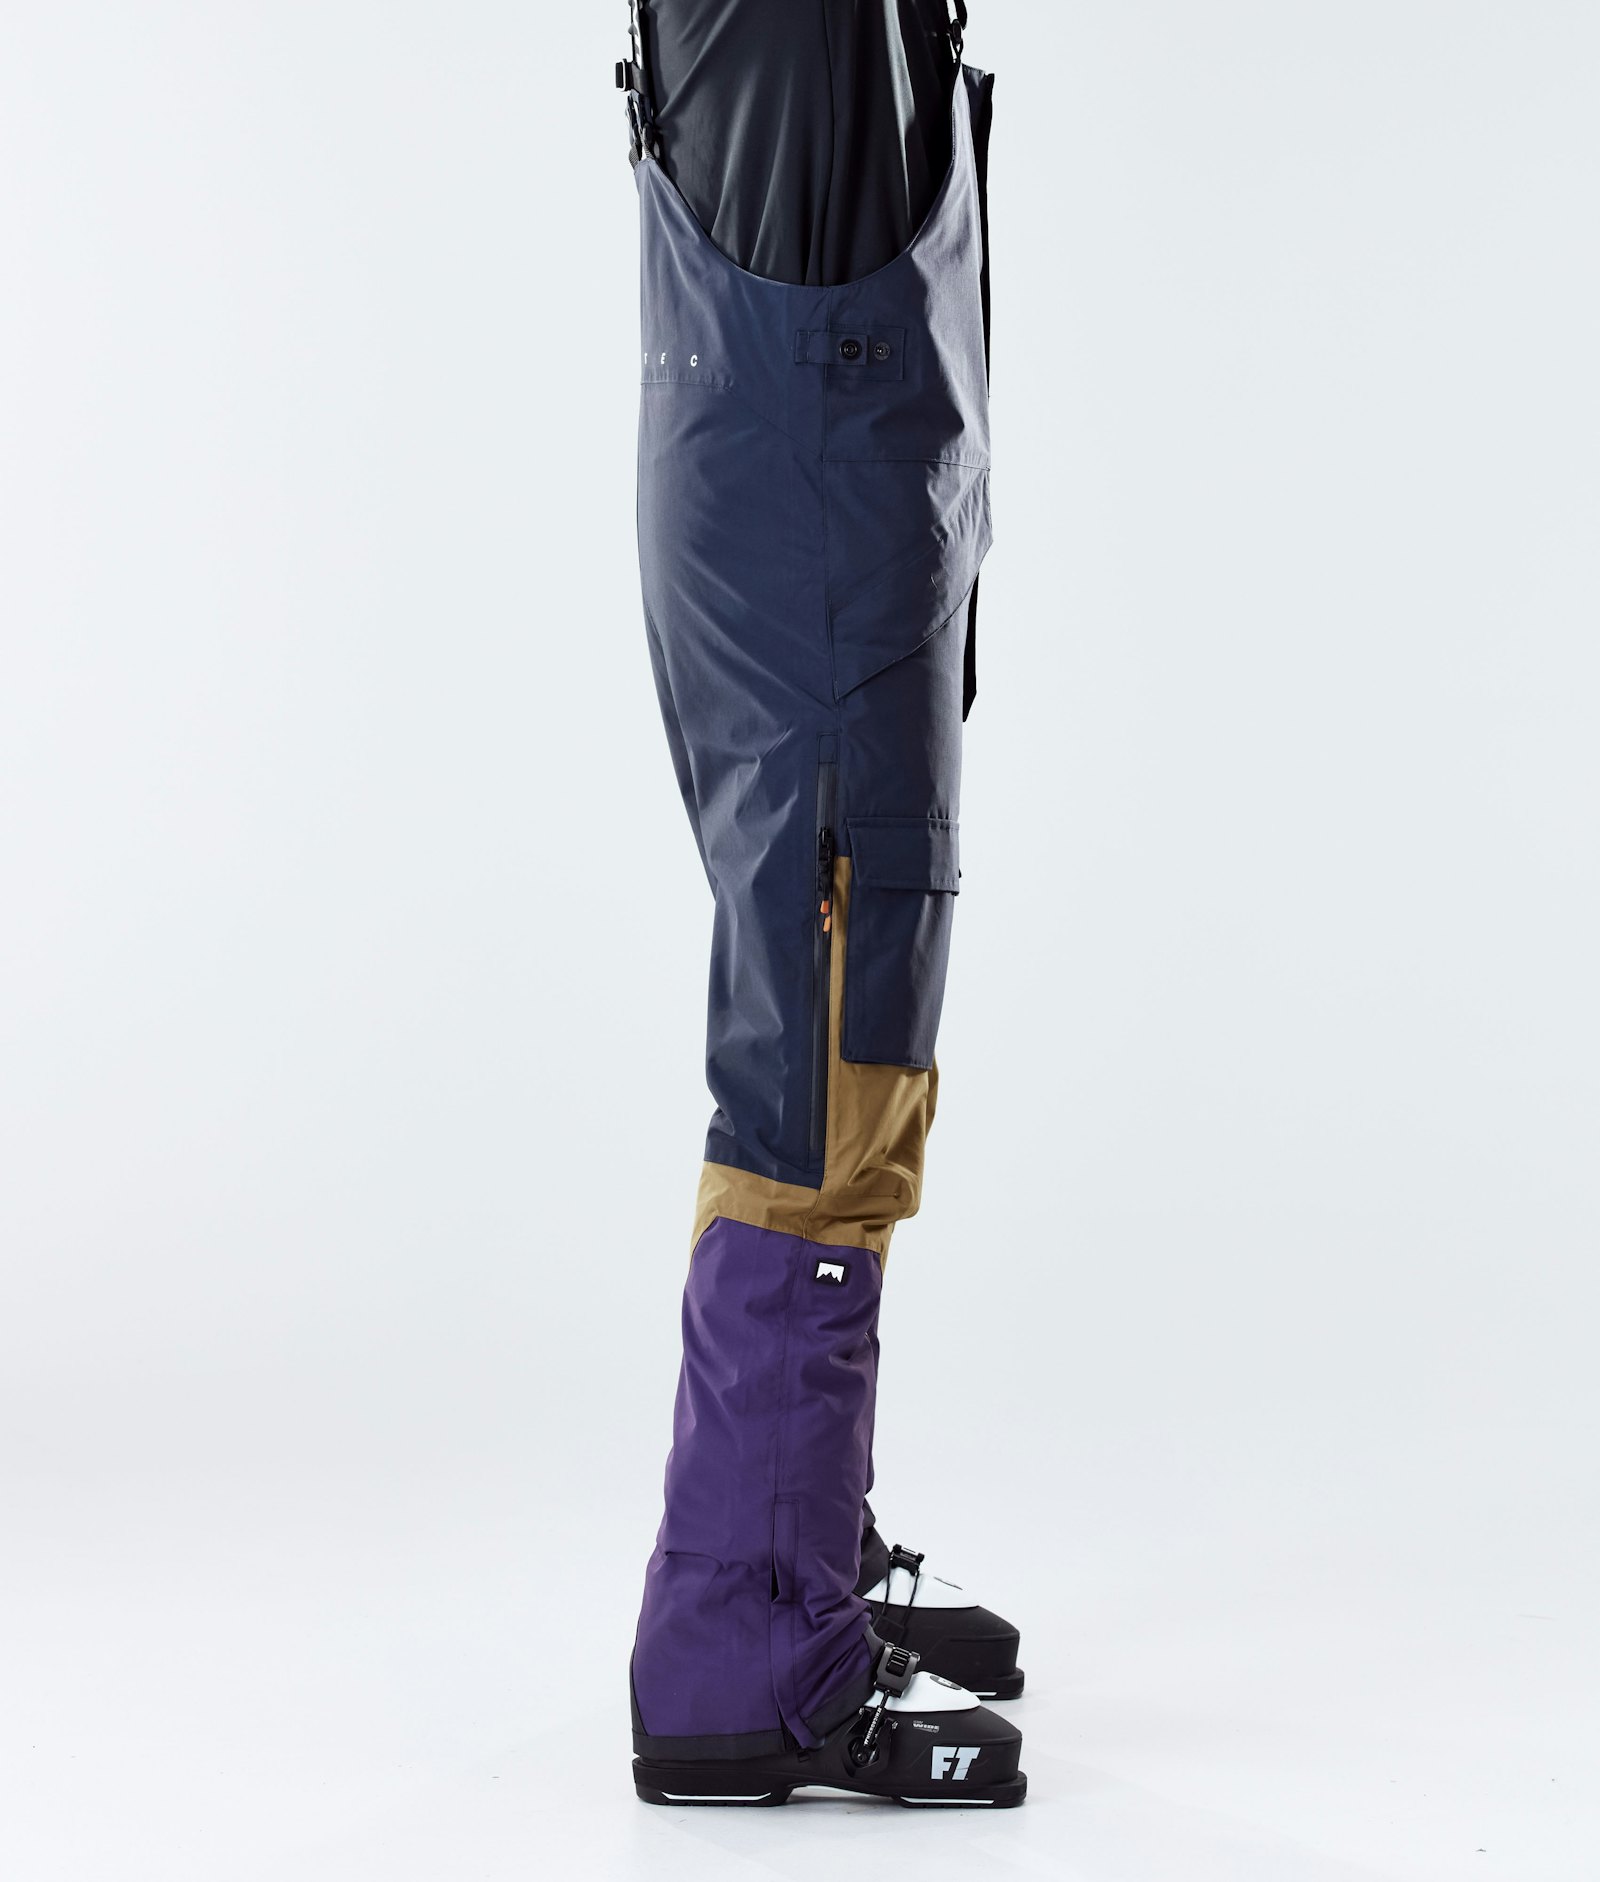 Fawk 2020 Ski Pants Men Marine/Gold/Purple